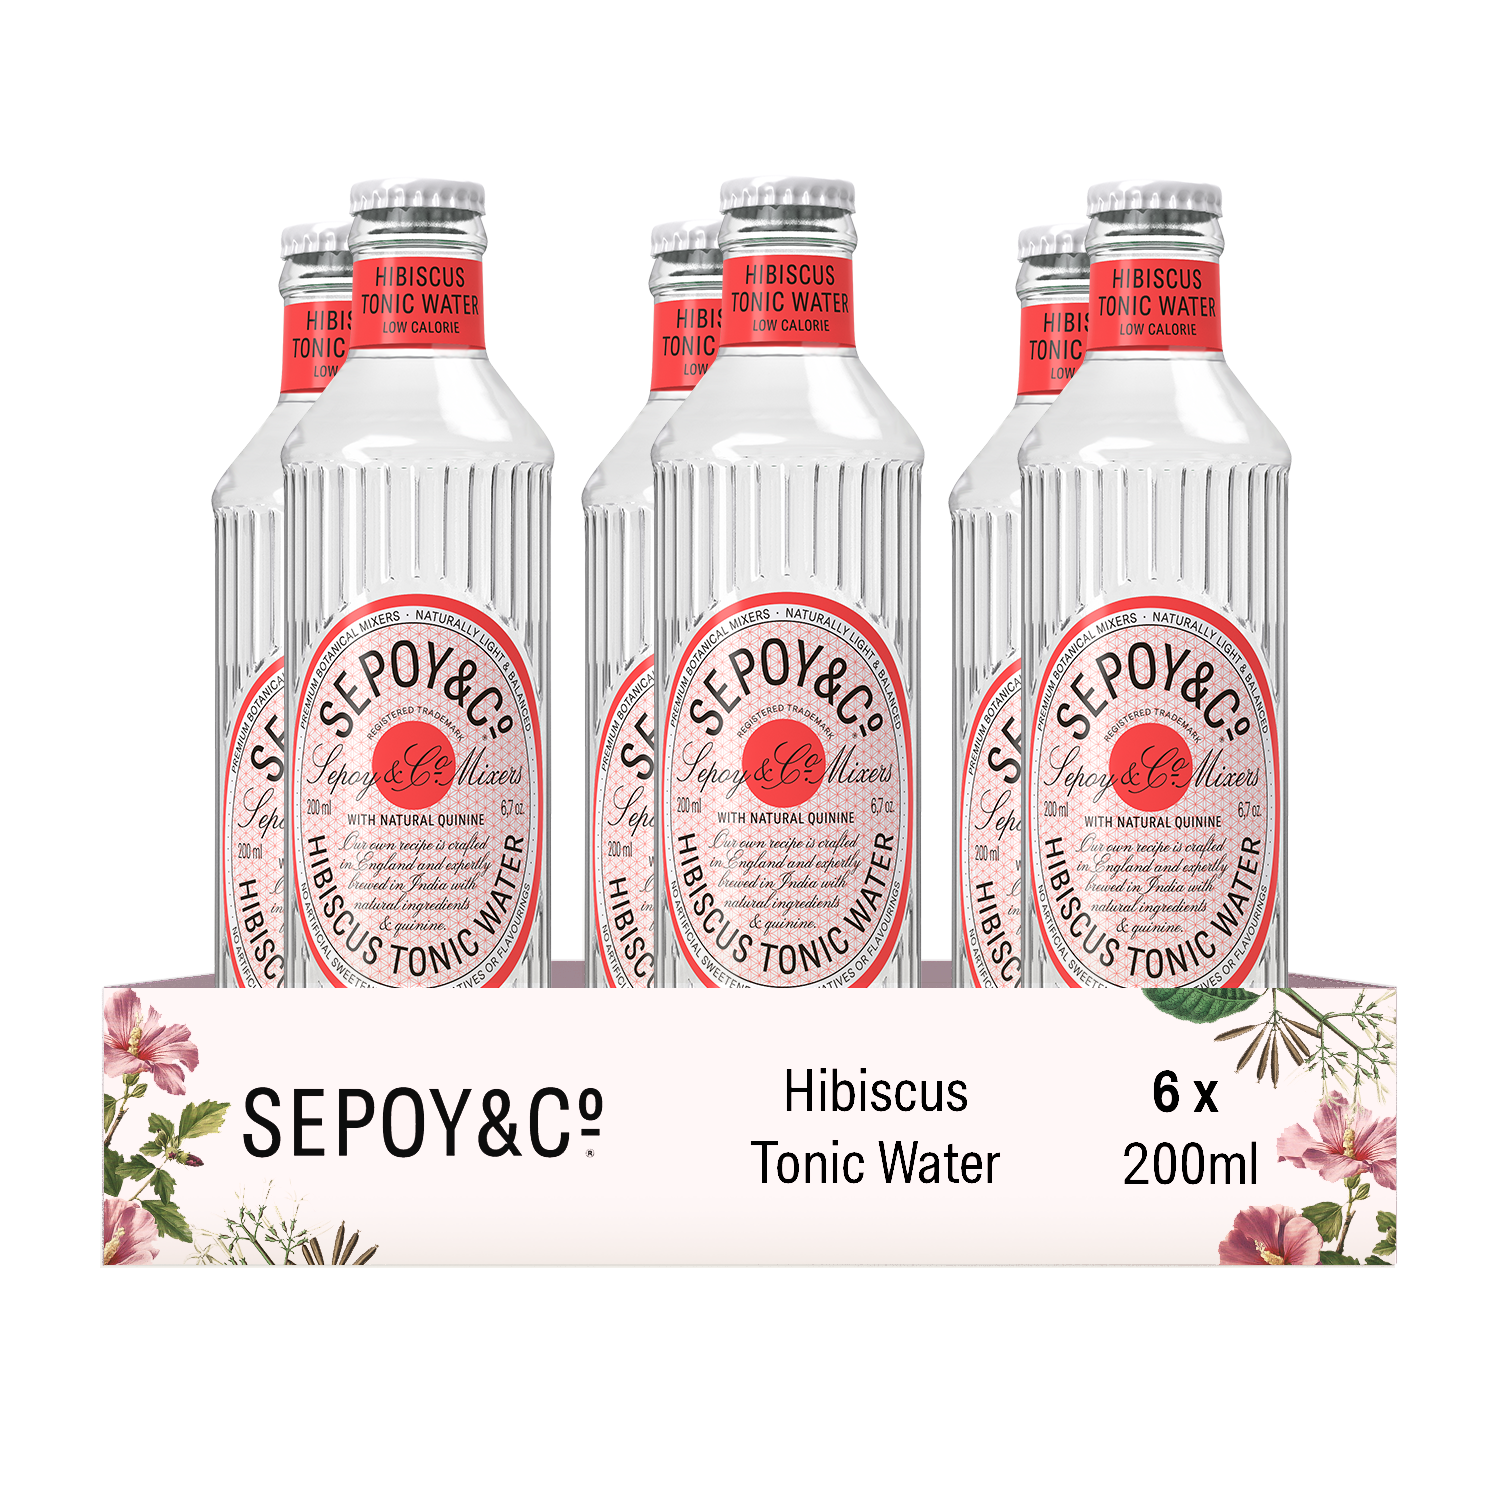 Hibiscus Tonic Water